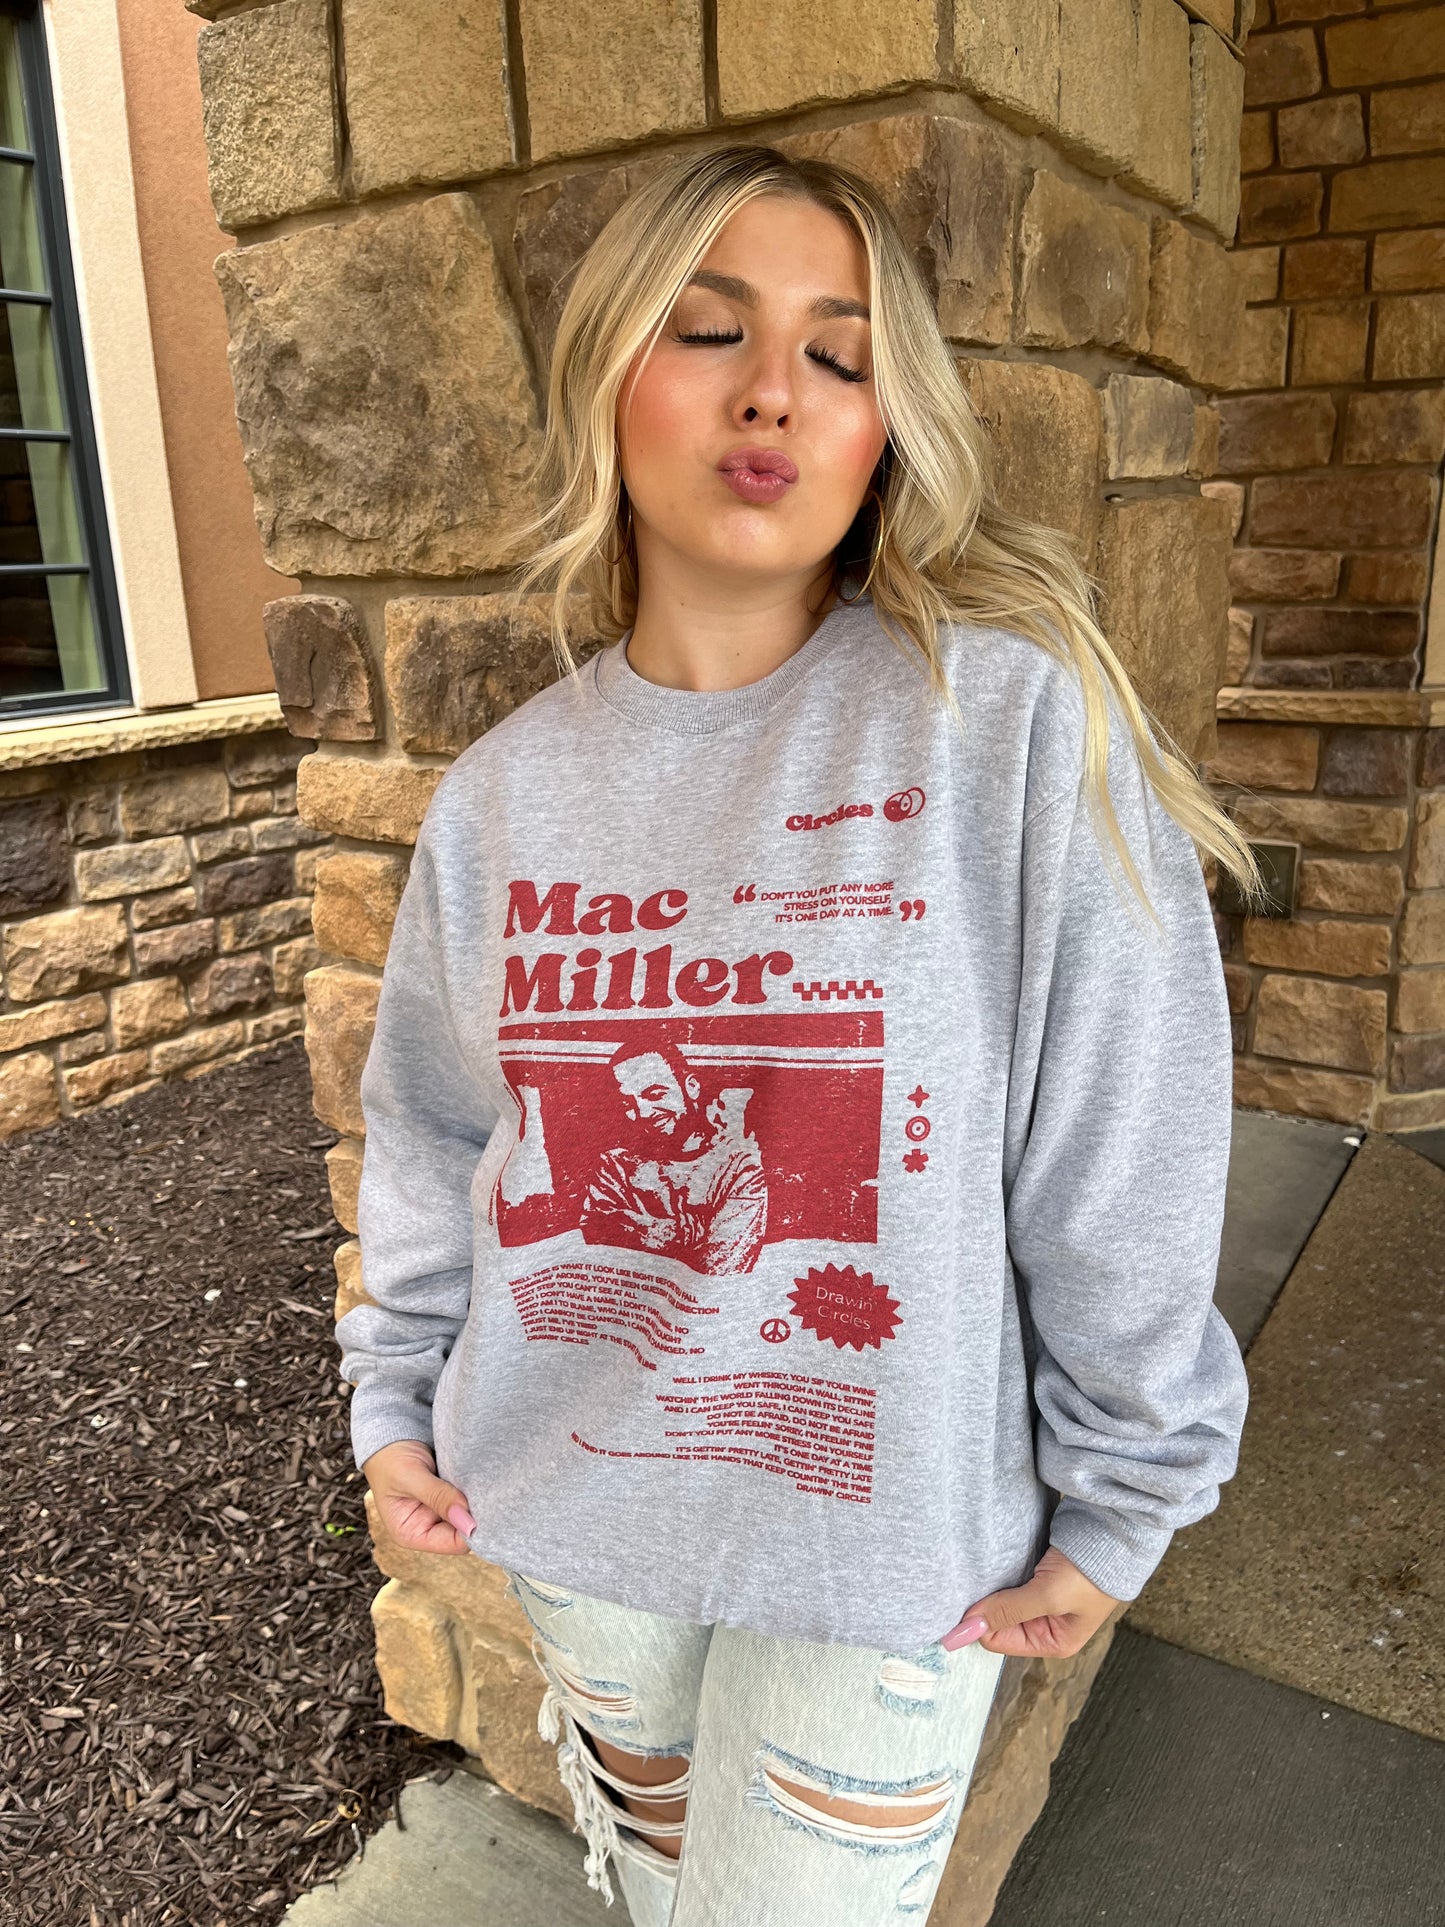 Circles Mac Miller Sweatshirt in Grey